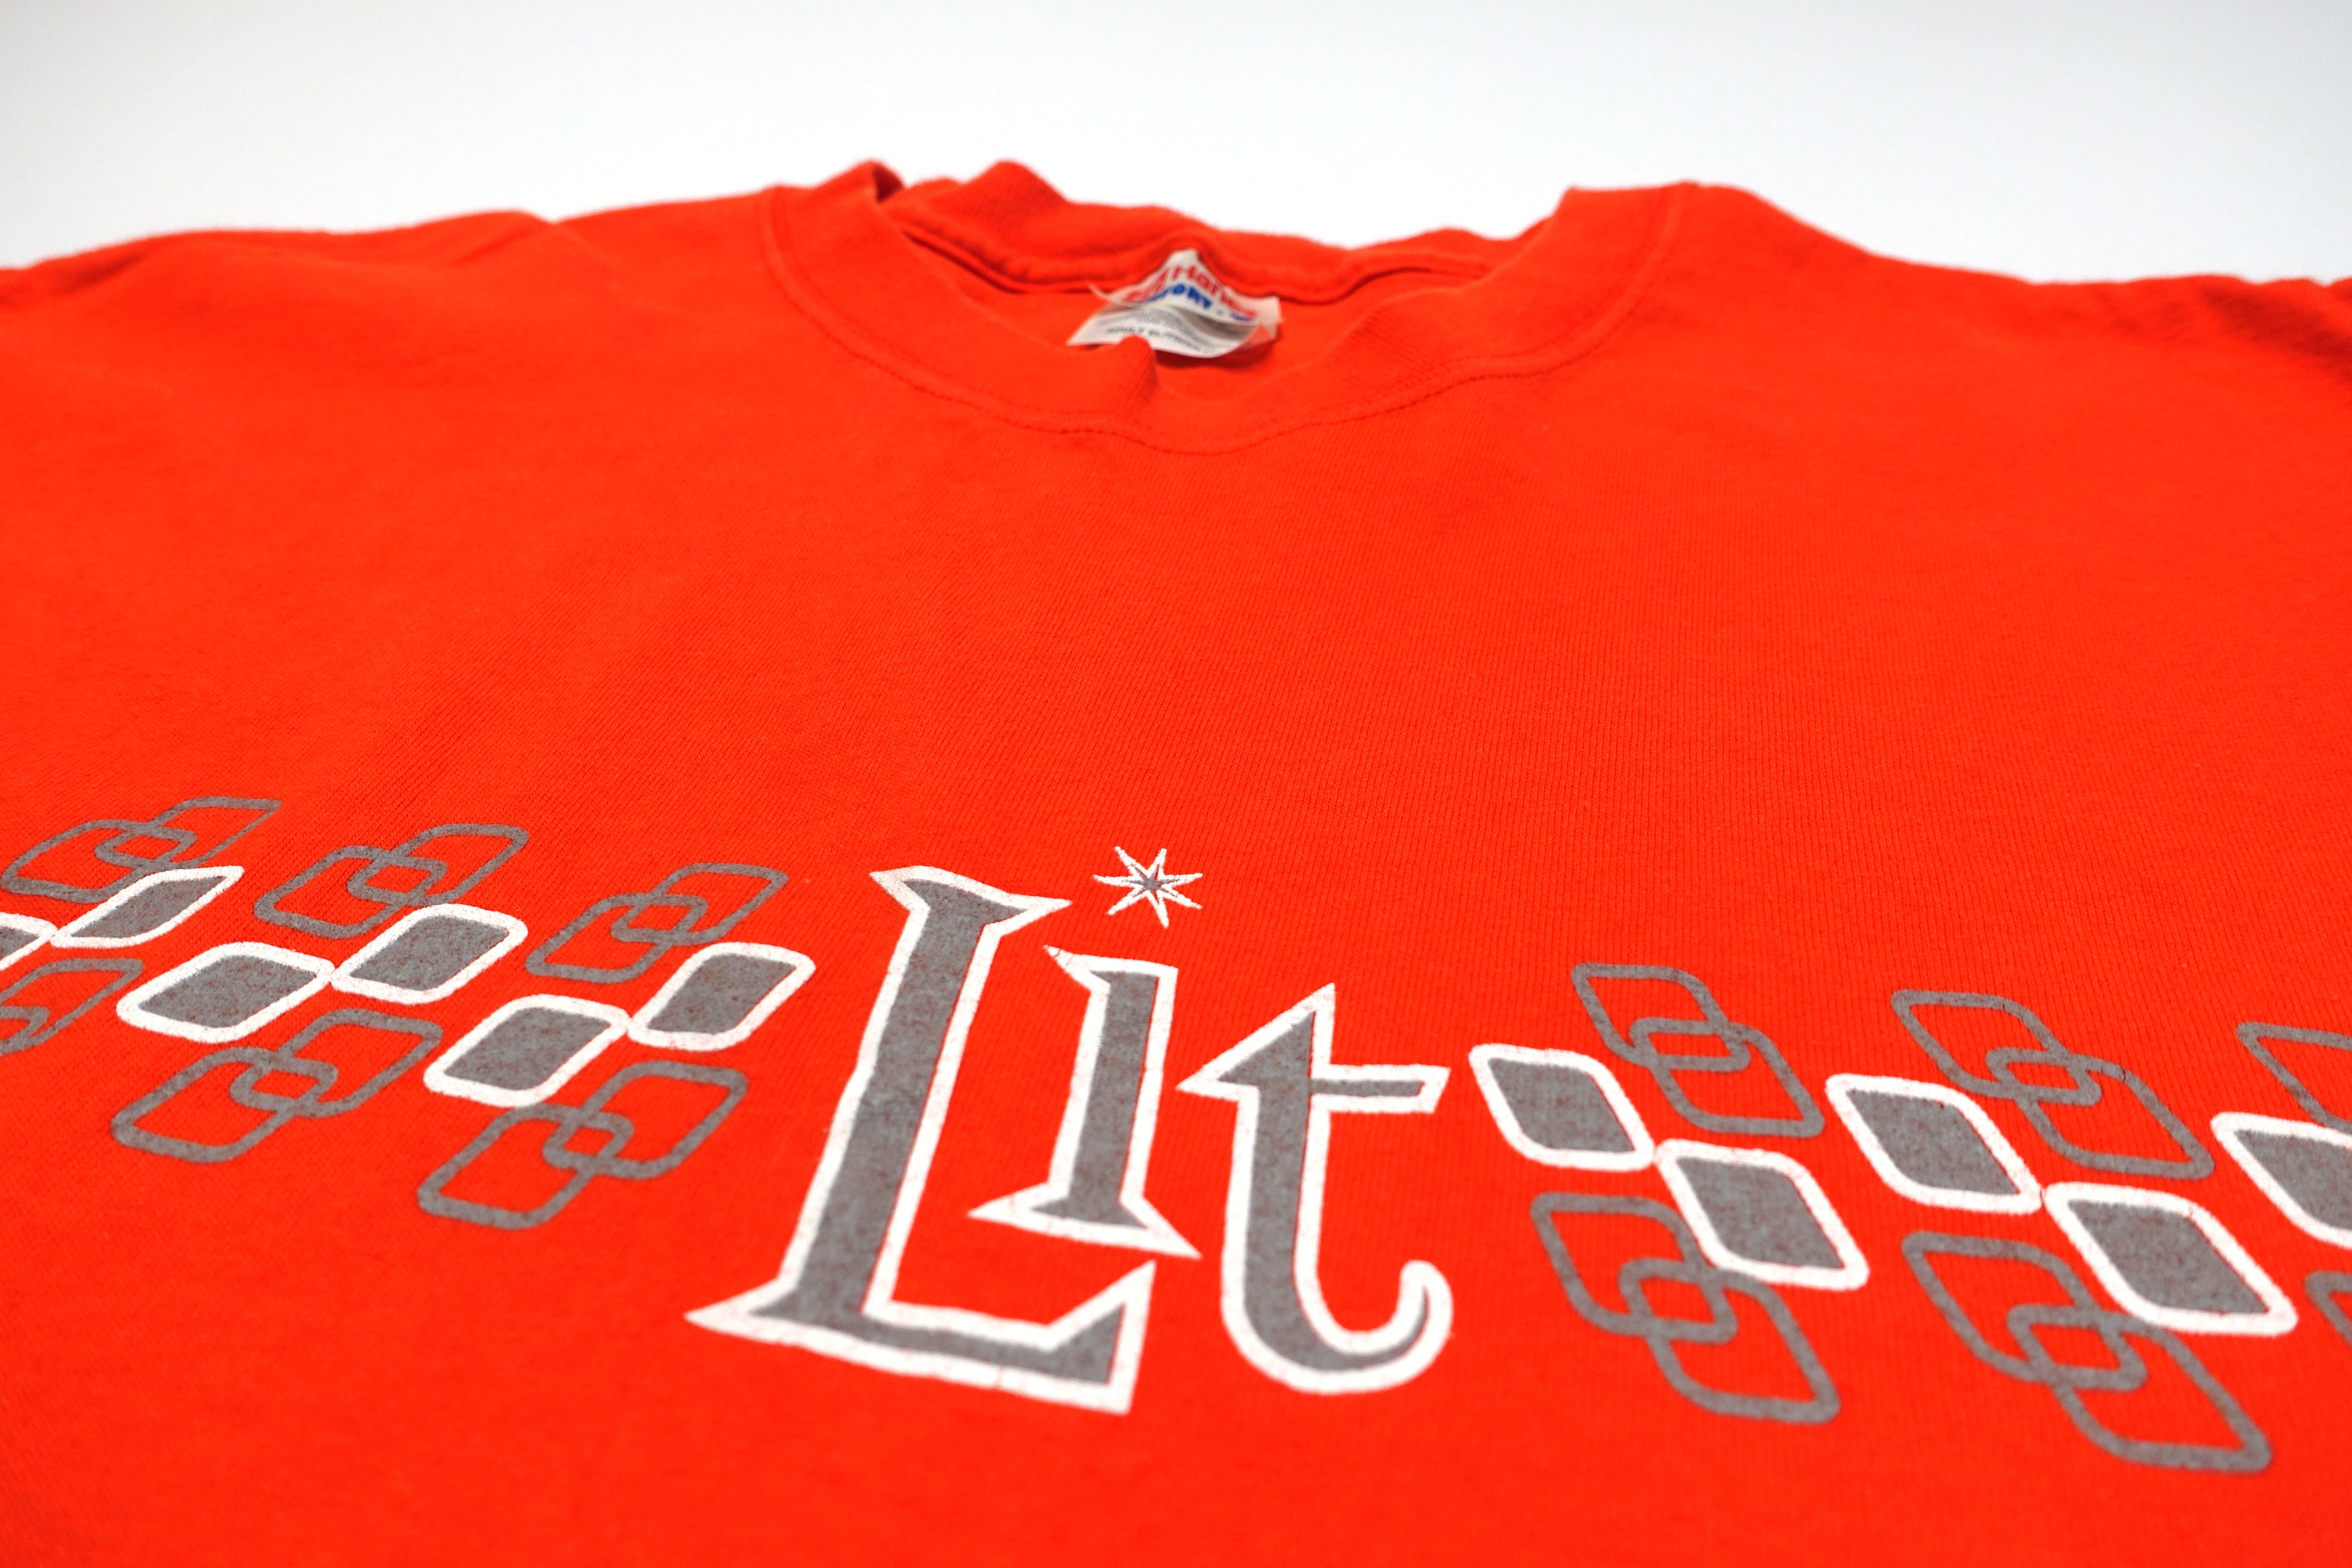 Lit – Tripping The Light Fantastic 1997 Tour Shirt Size XL